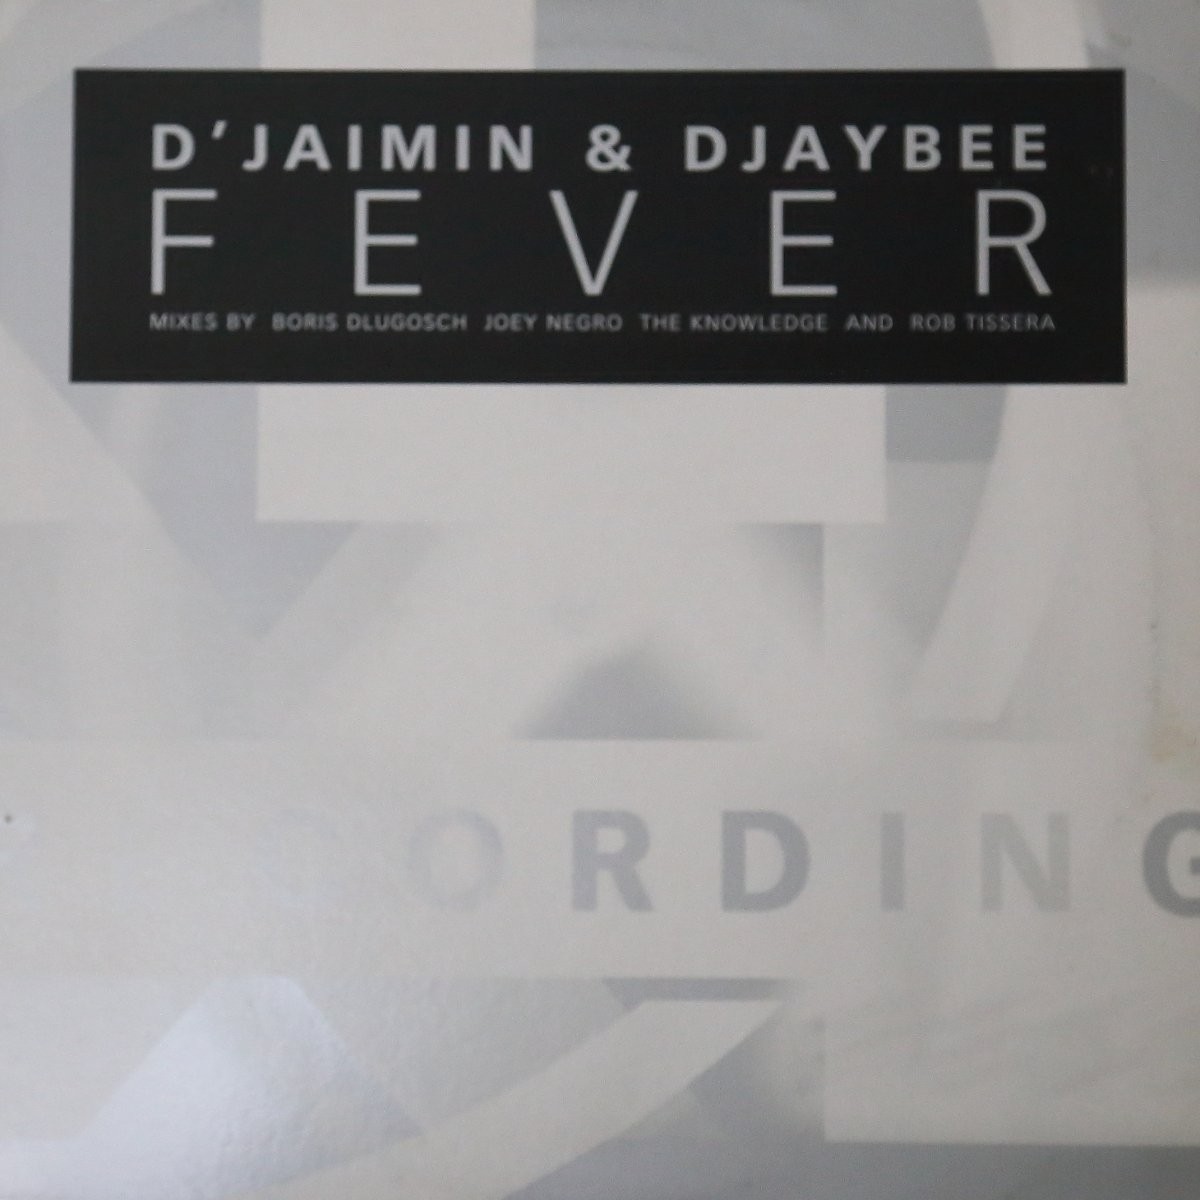 DJaimin & DJaybee - Fever (Joey Negro mix / Boris Dlugosch mix / Rob Tissera mix / The Knowledge Vocal mix)